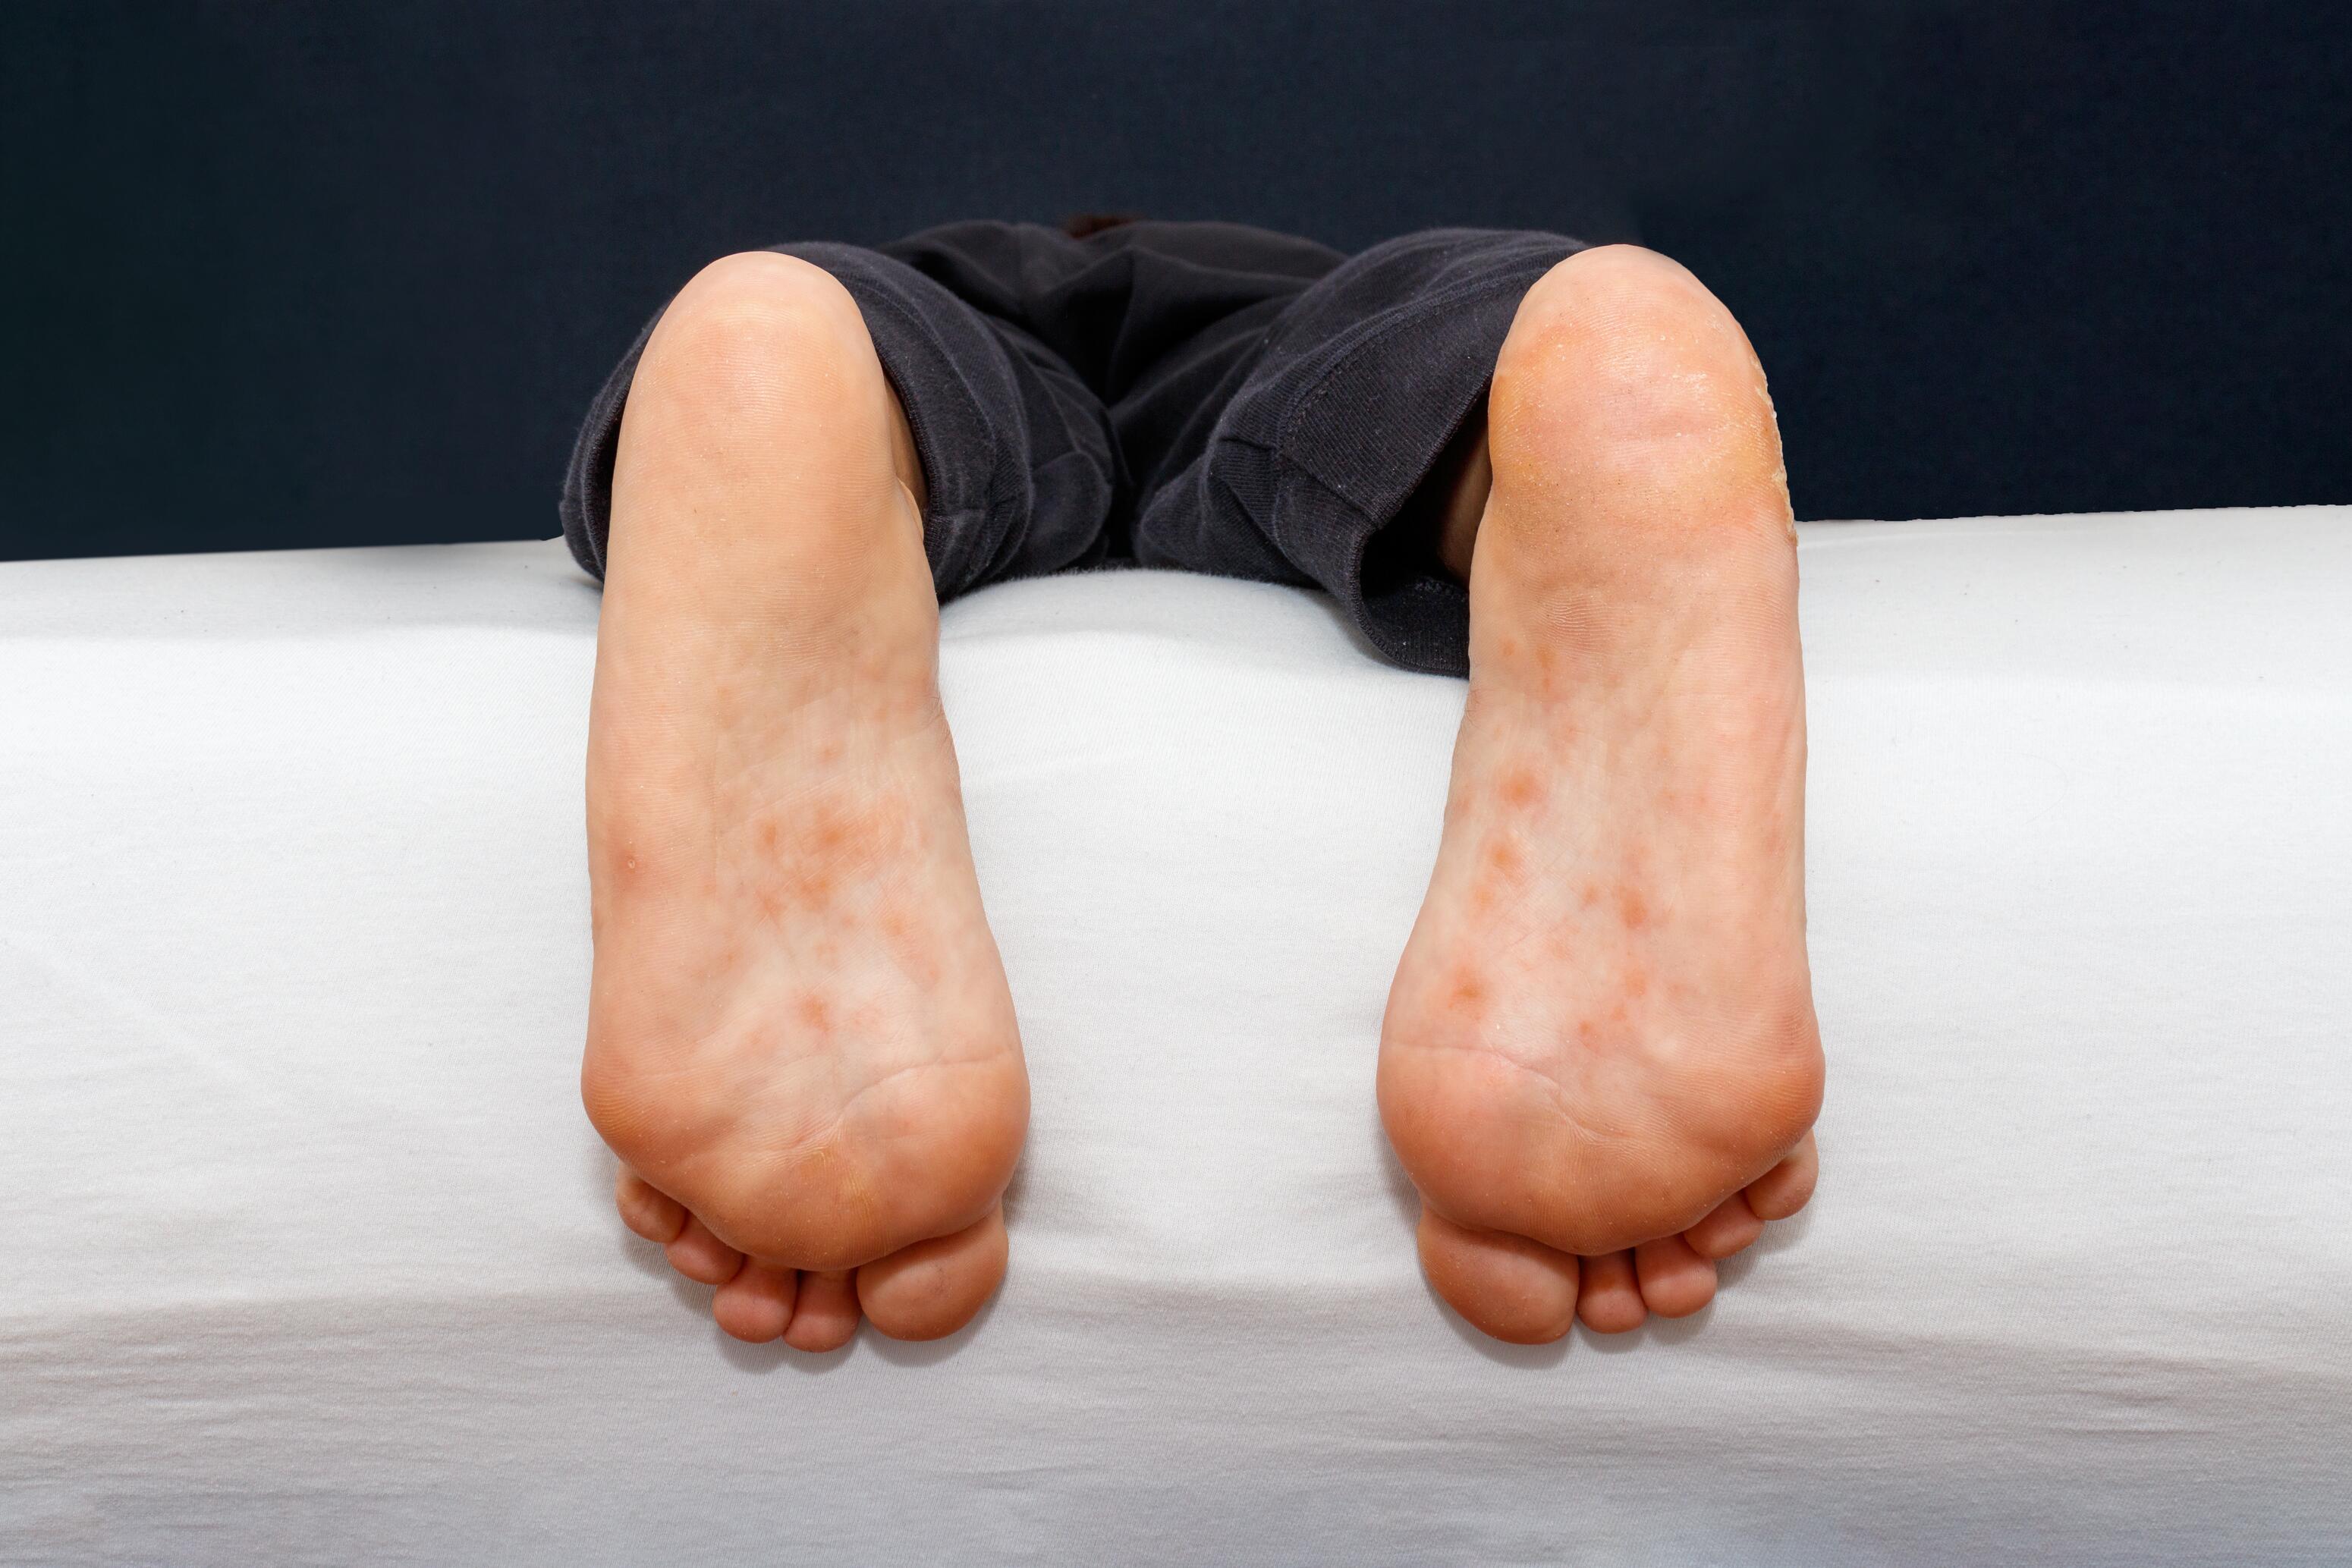 Dyshidrosis of the feet